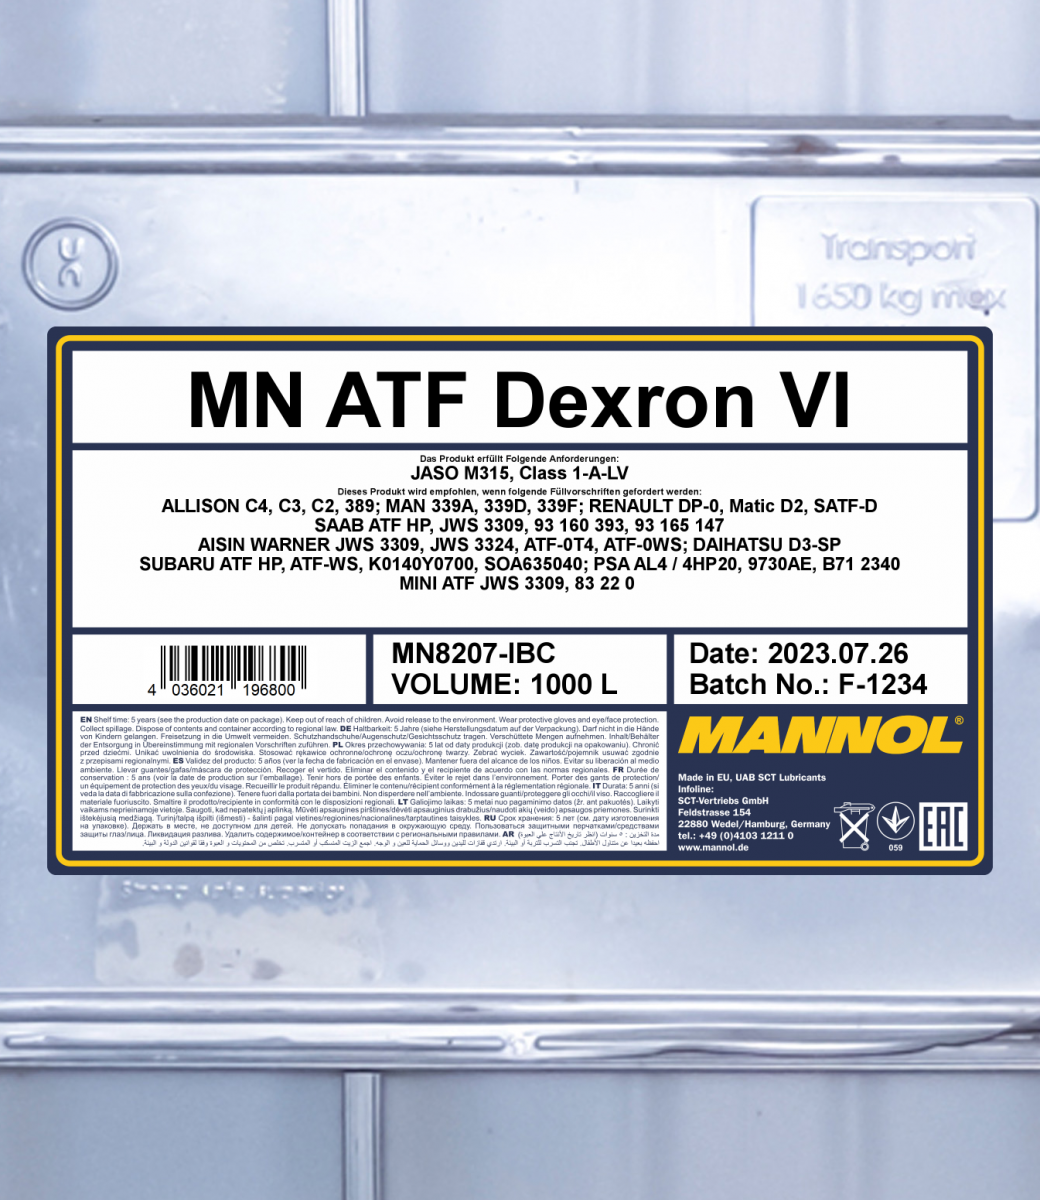 Drydene D4620005 Drydene Transall Global Synthetic ATF- Dexron VI, Mercon LV-  1 case (6 quarts)